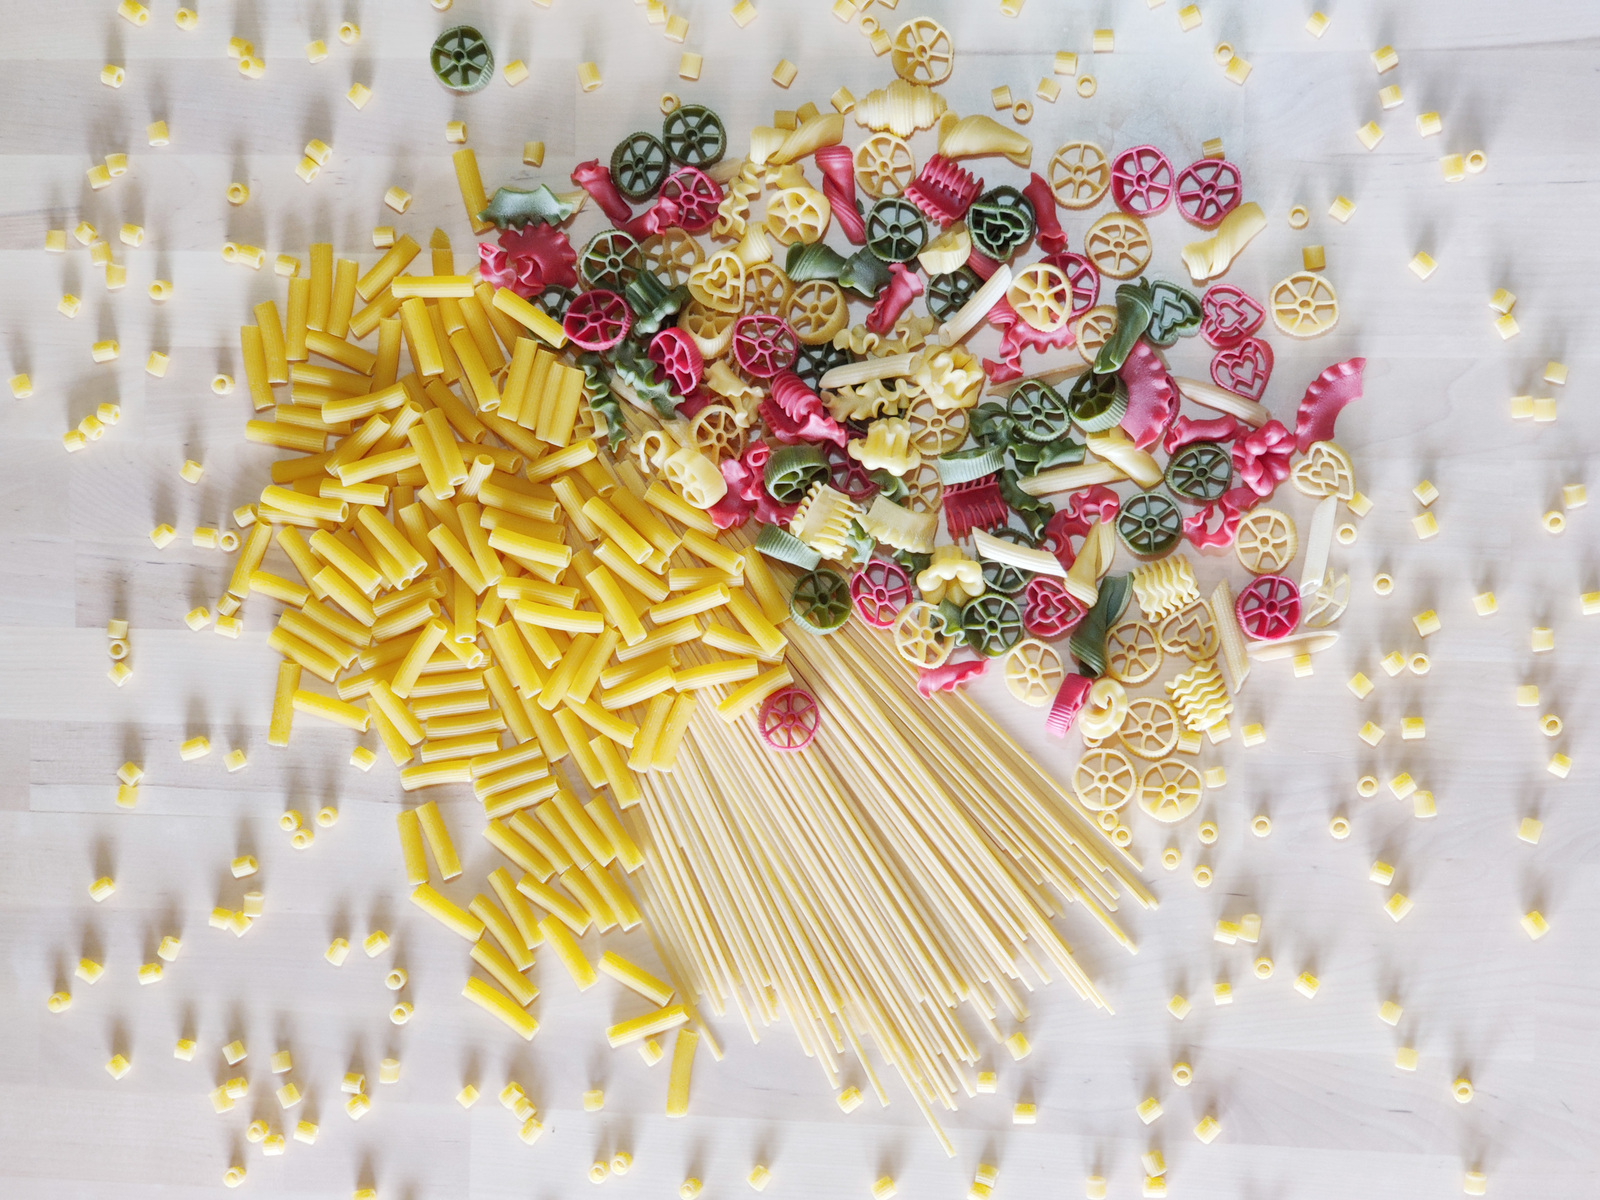 Different types of italian dry pasta